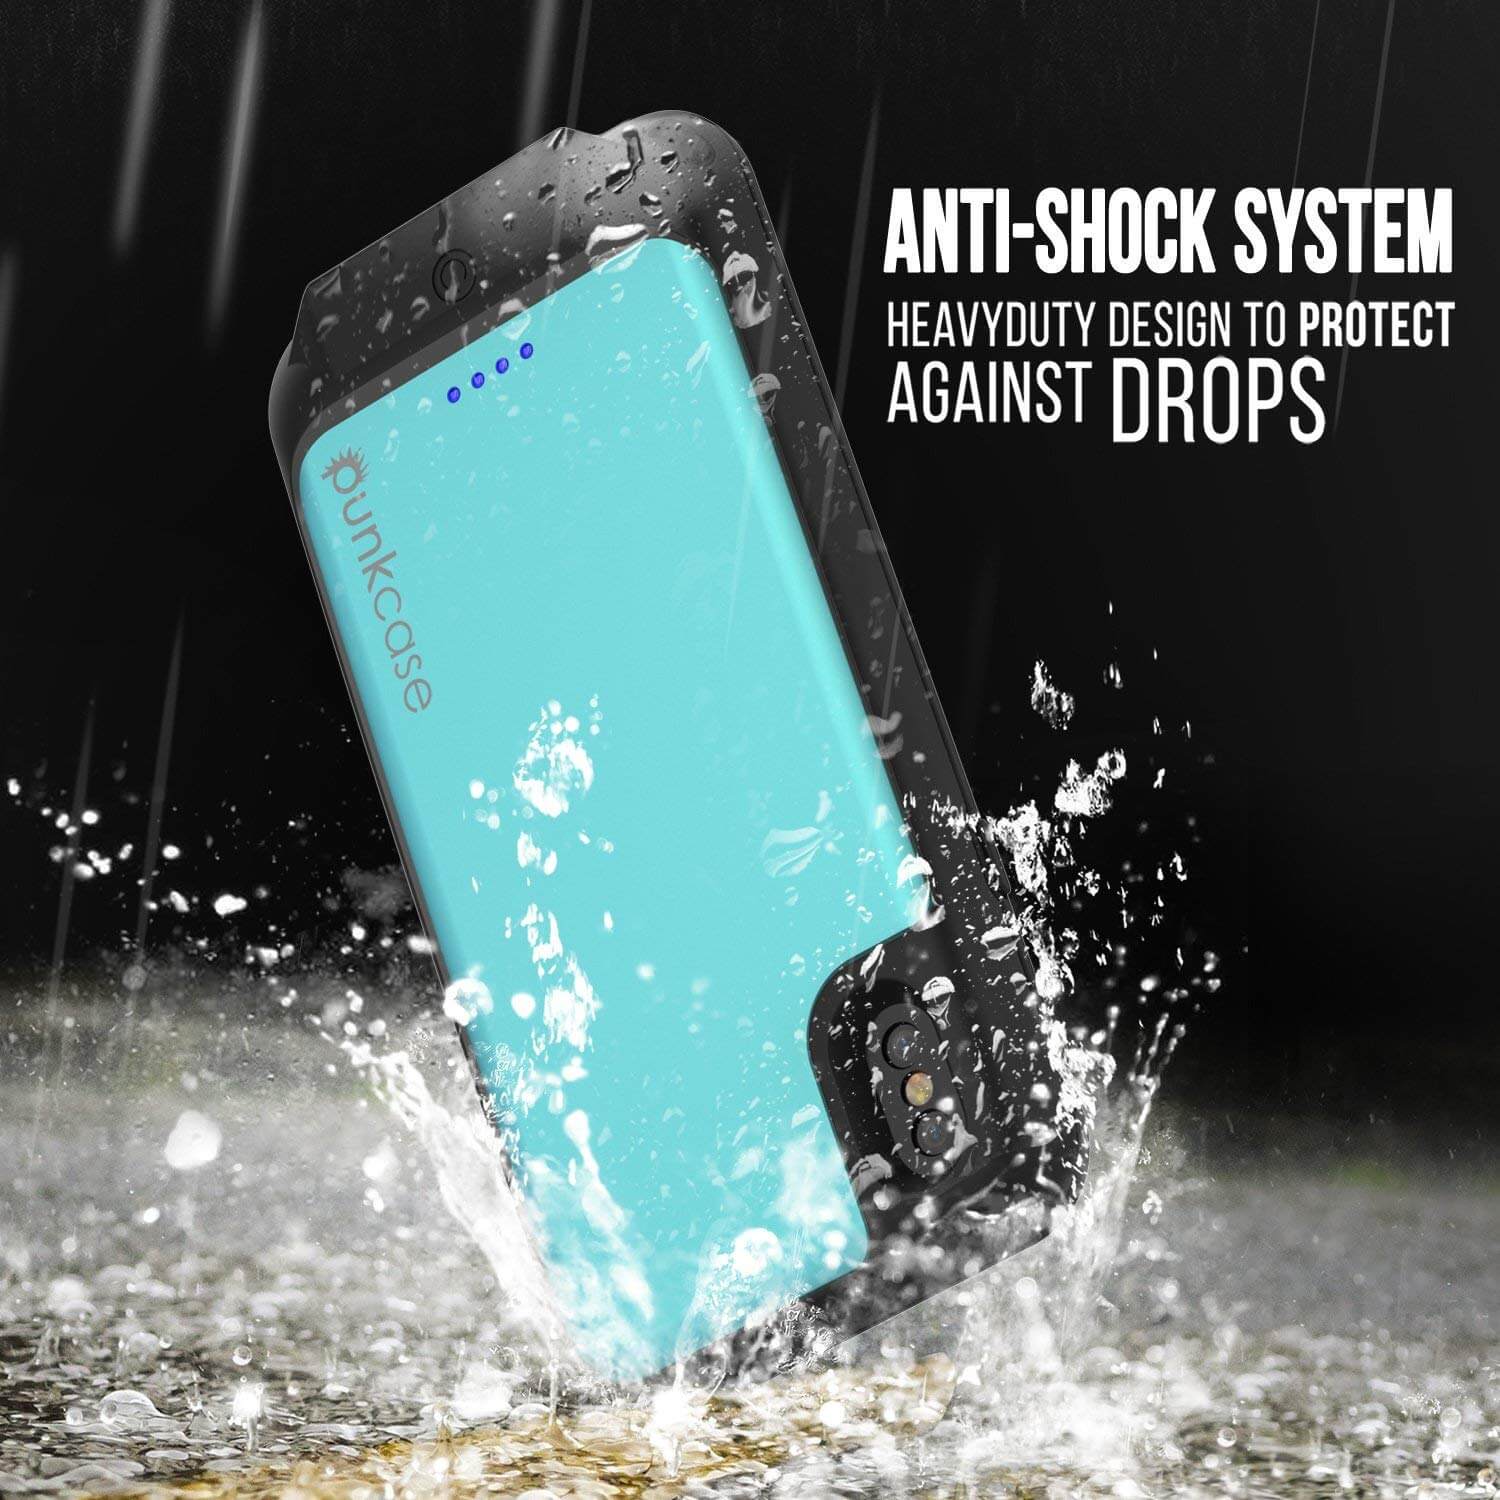 PunkJuice iPhone X Battery Case, Waterproof, IP68 Certified [Teal]